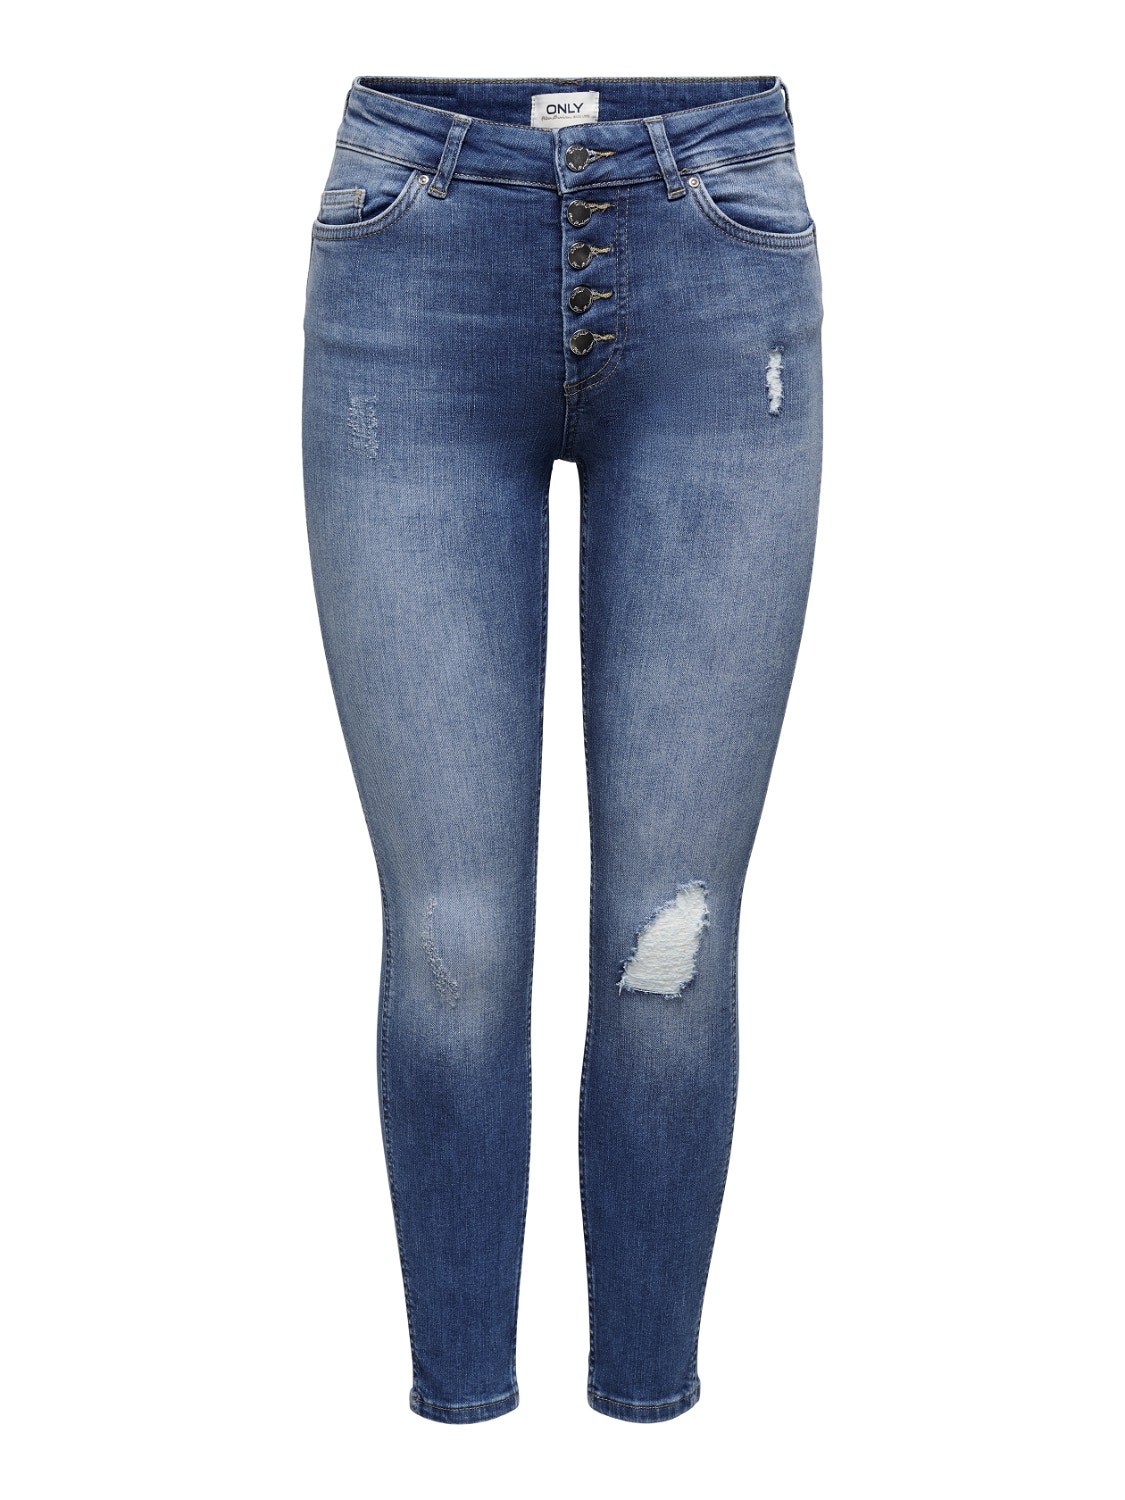 ONLY Jeans Skinny Fit Taille moyenne Ourlé destroy -Medium Blue Denim - 15266331